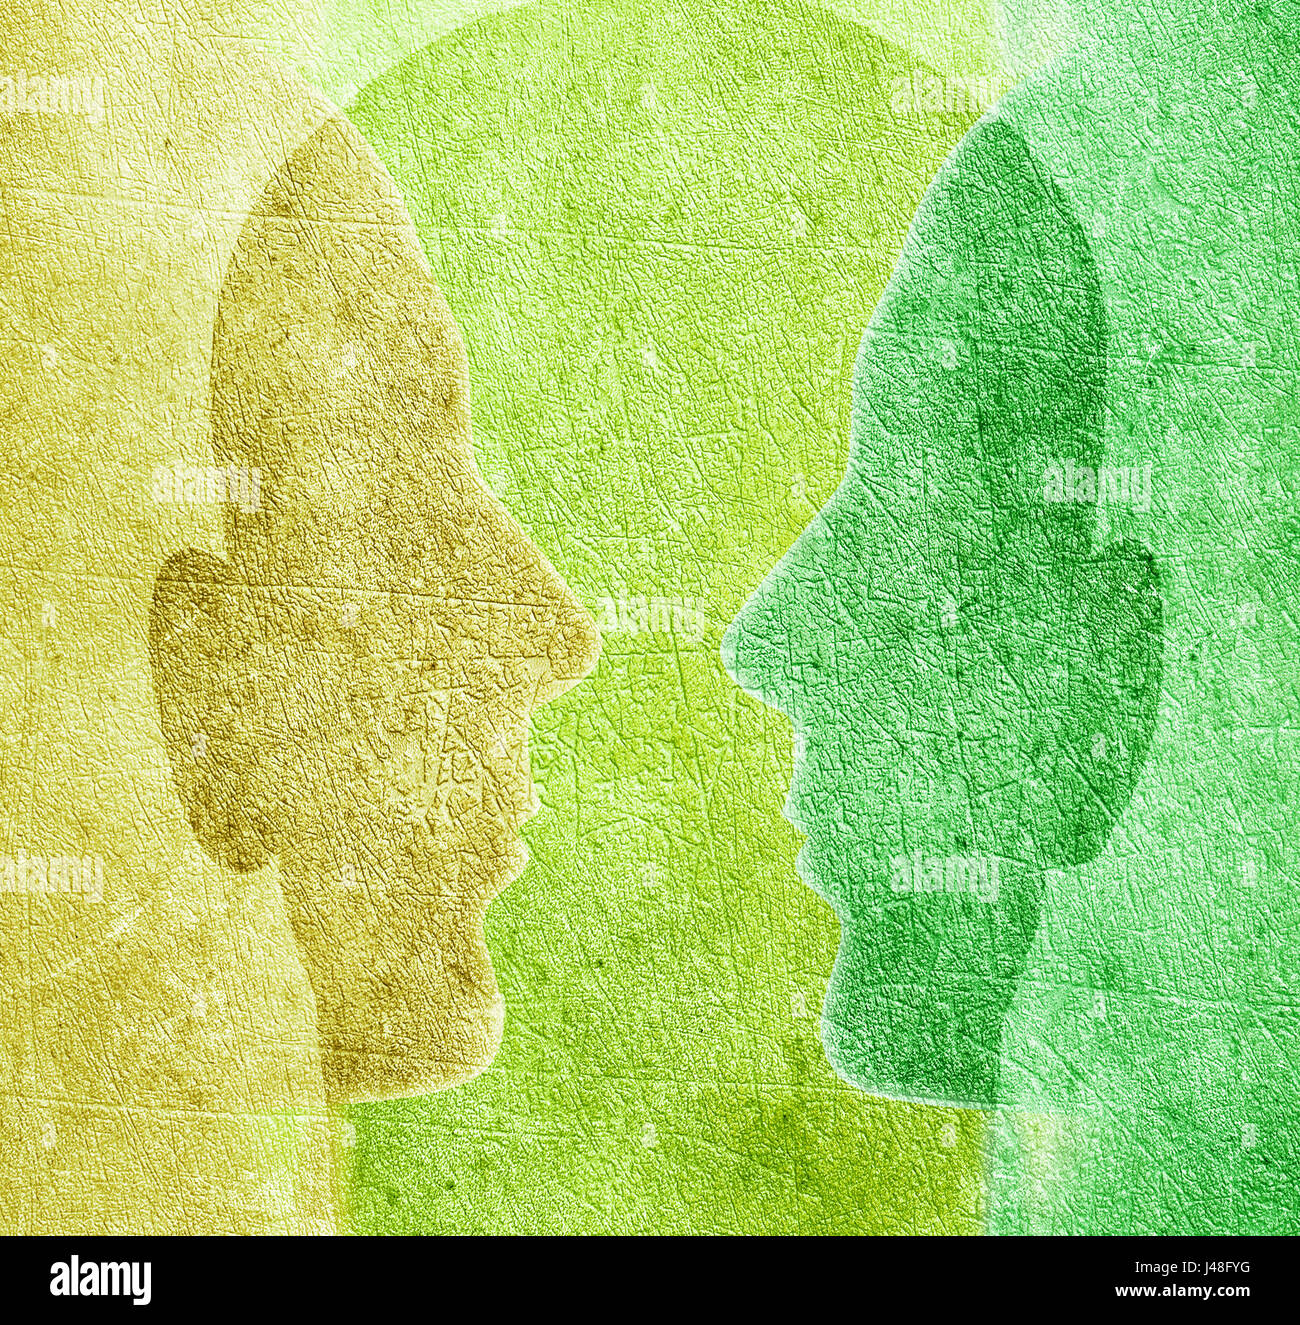 three colored heads digital illustration Stock Photo